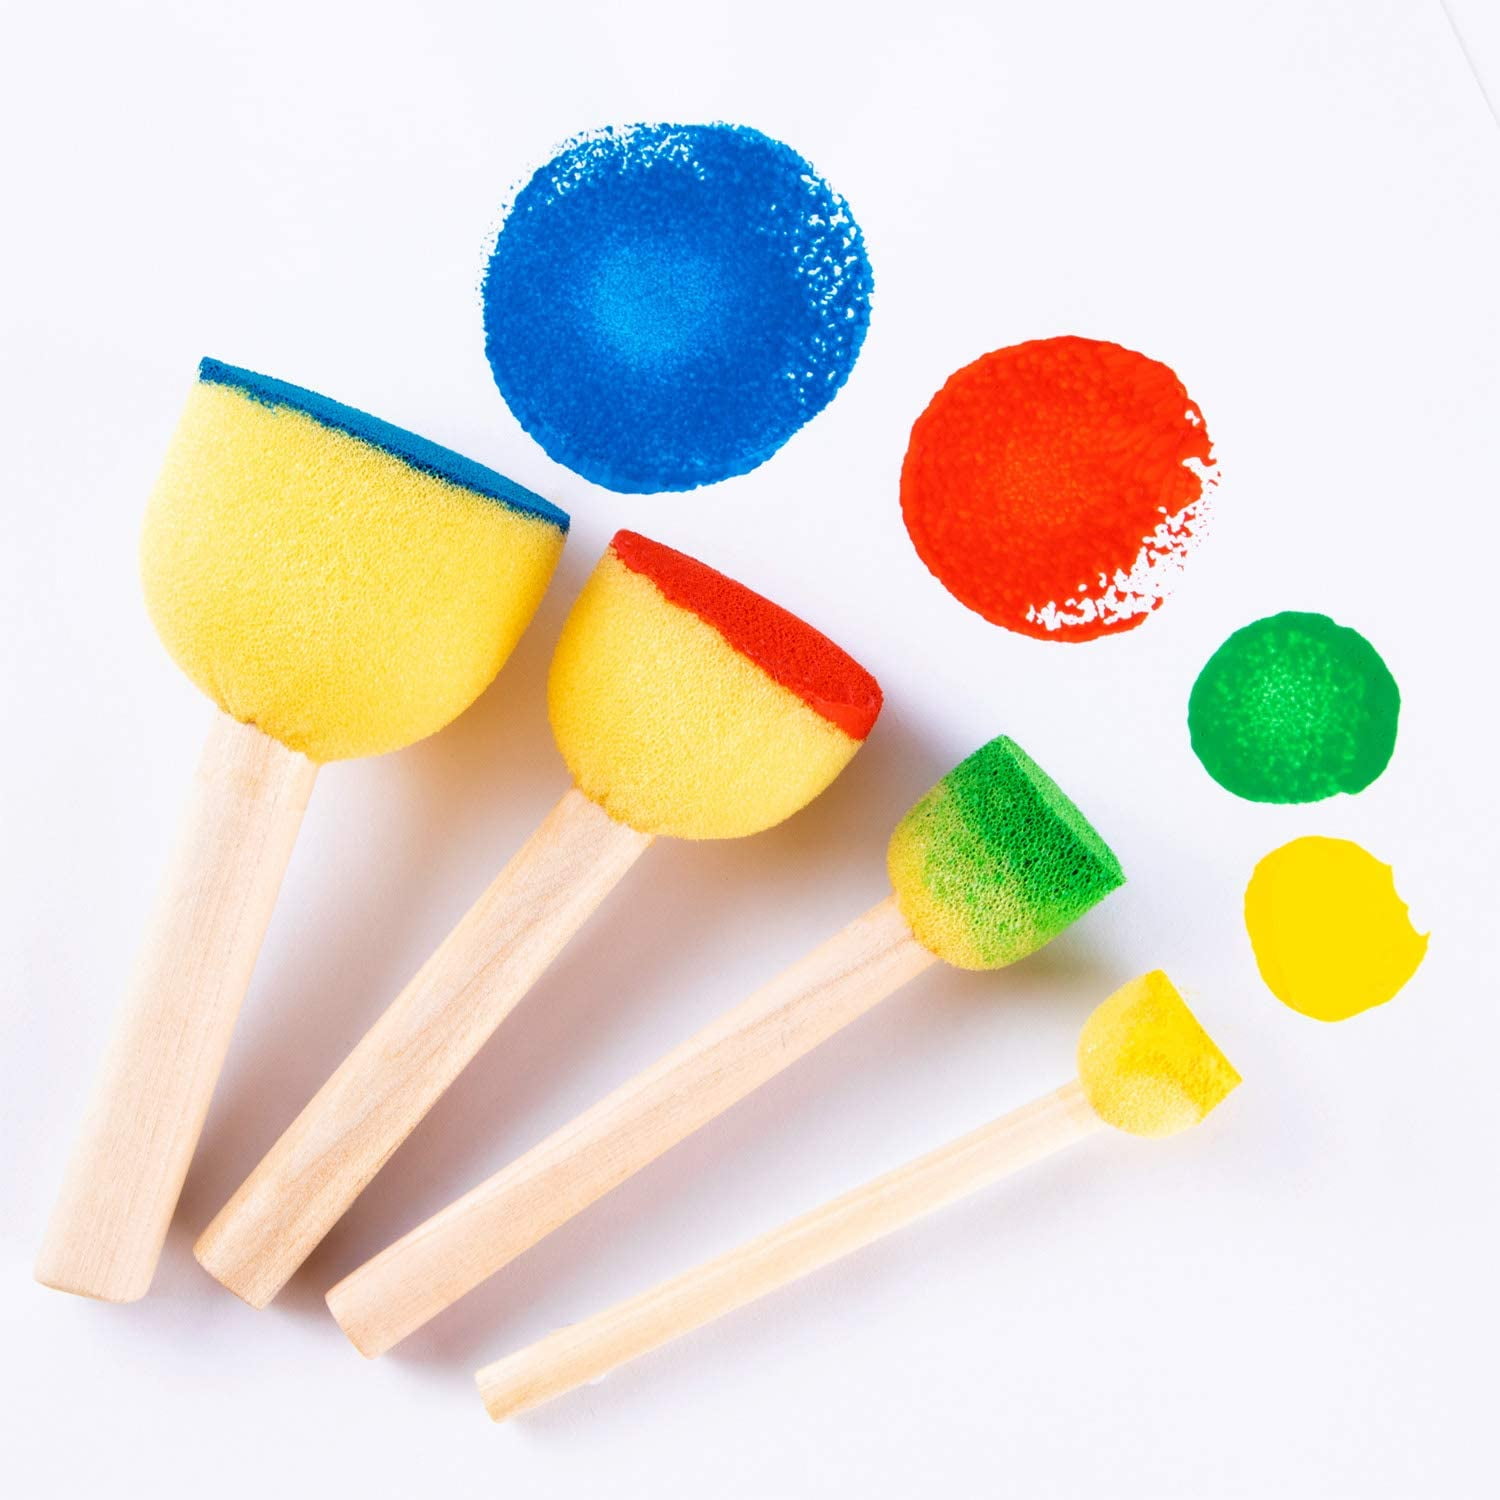 0.6 Paint Sponges for Painting, 40pcs Round Painting Sponge Foam Brush,  Yellow